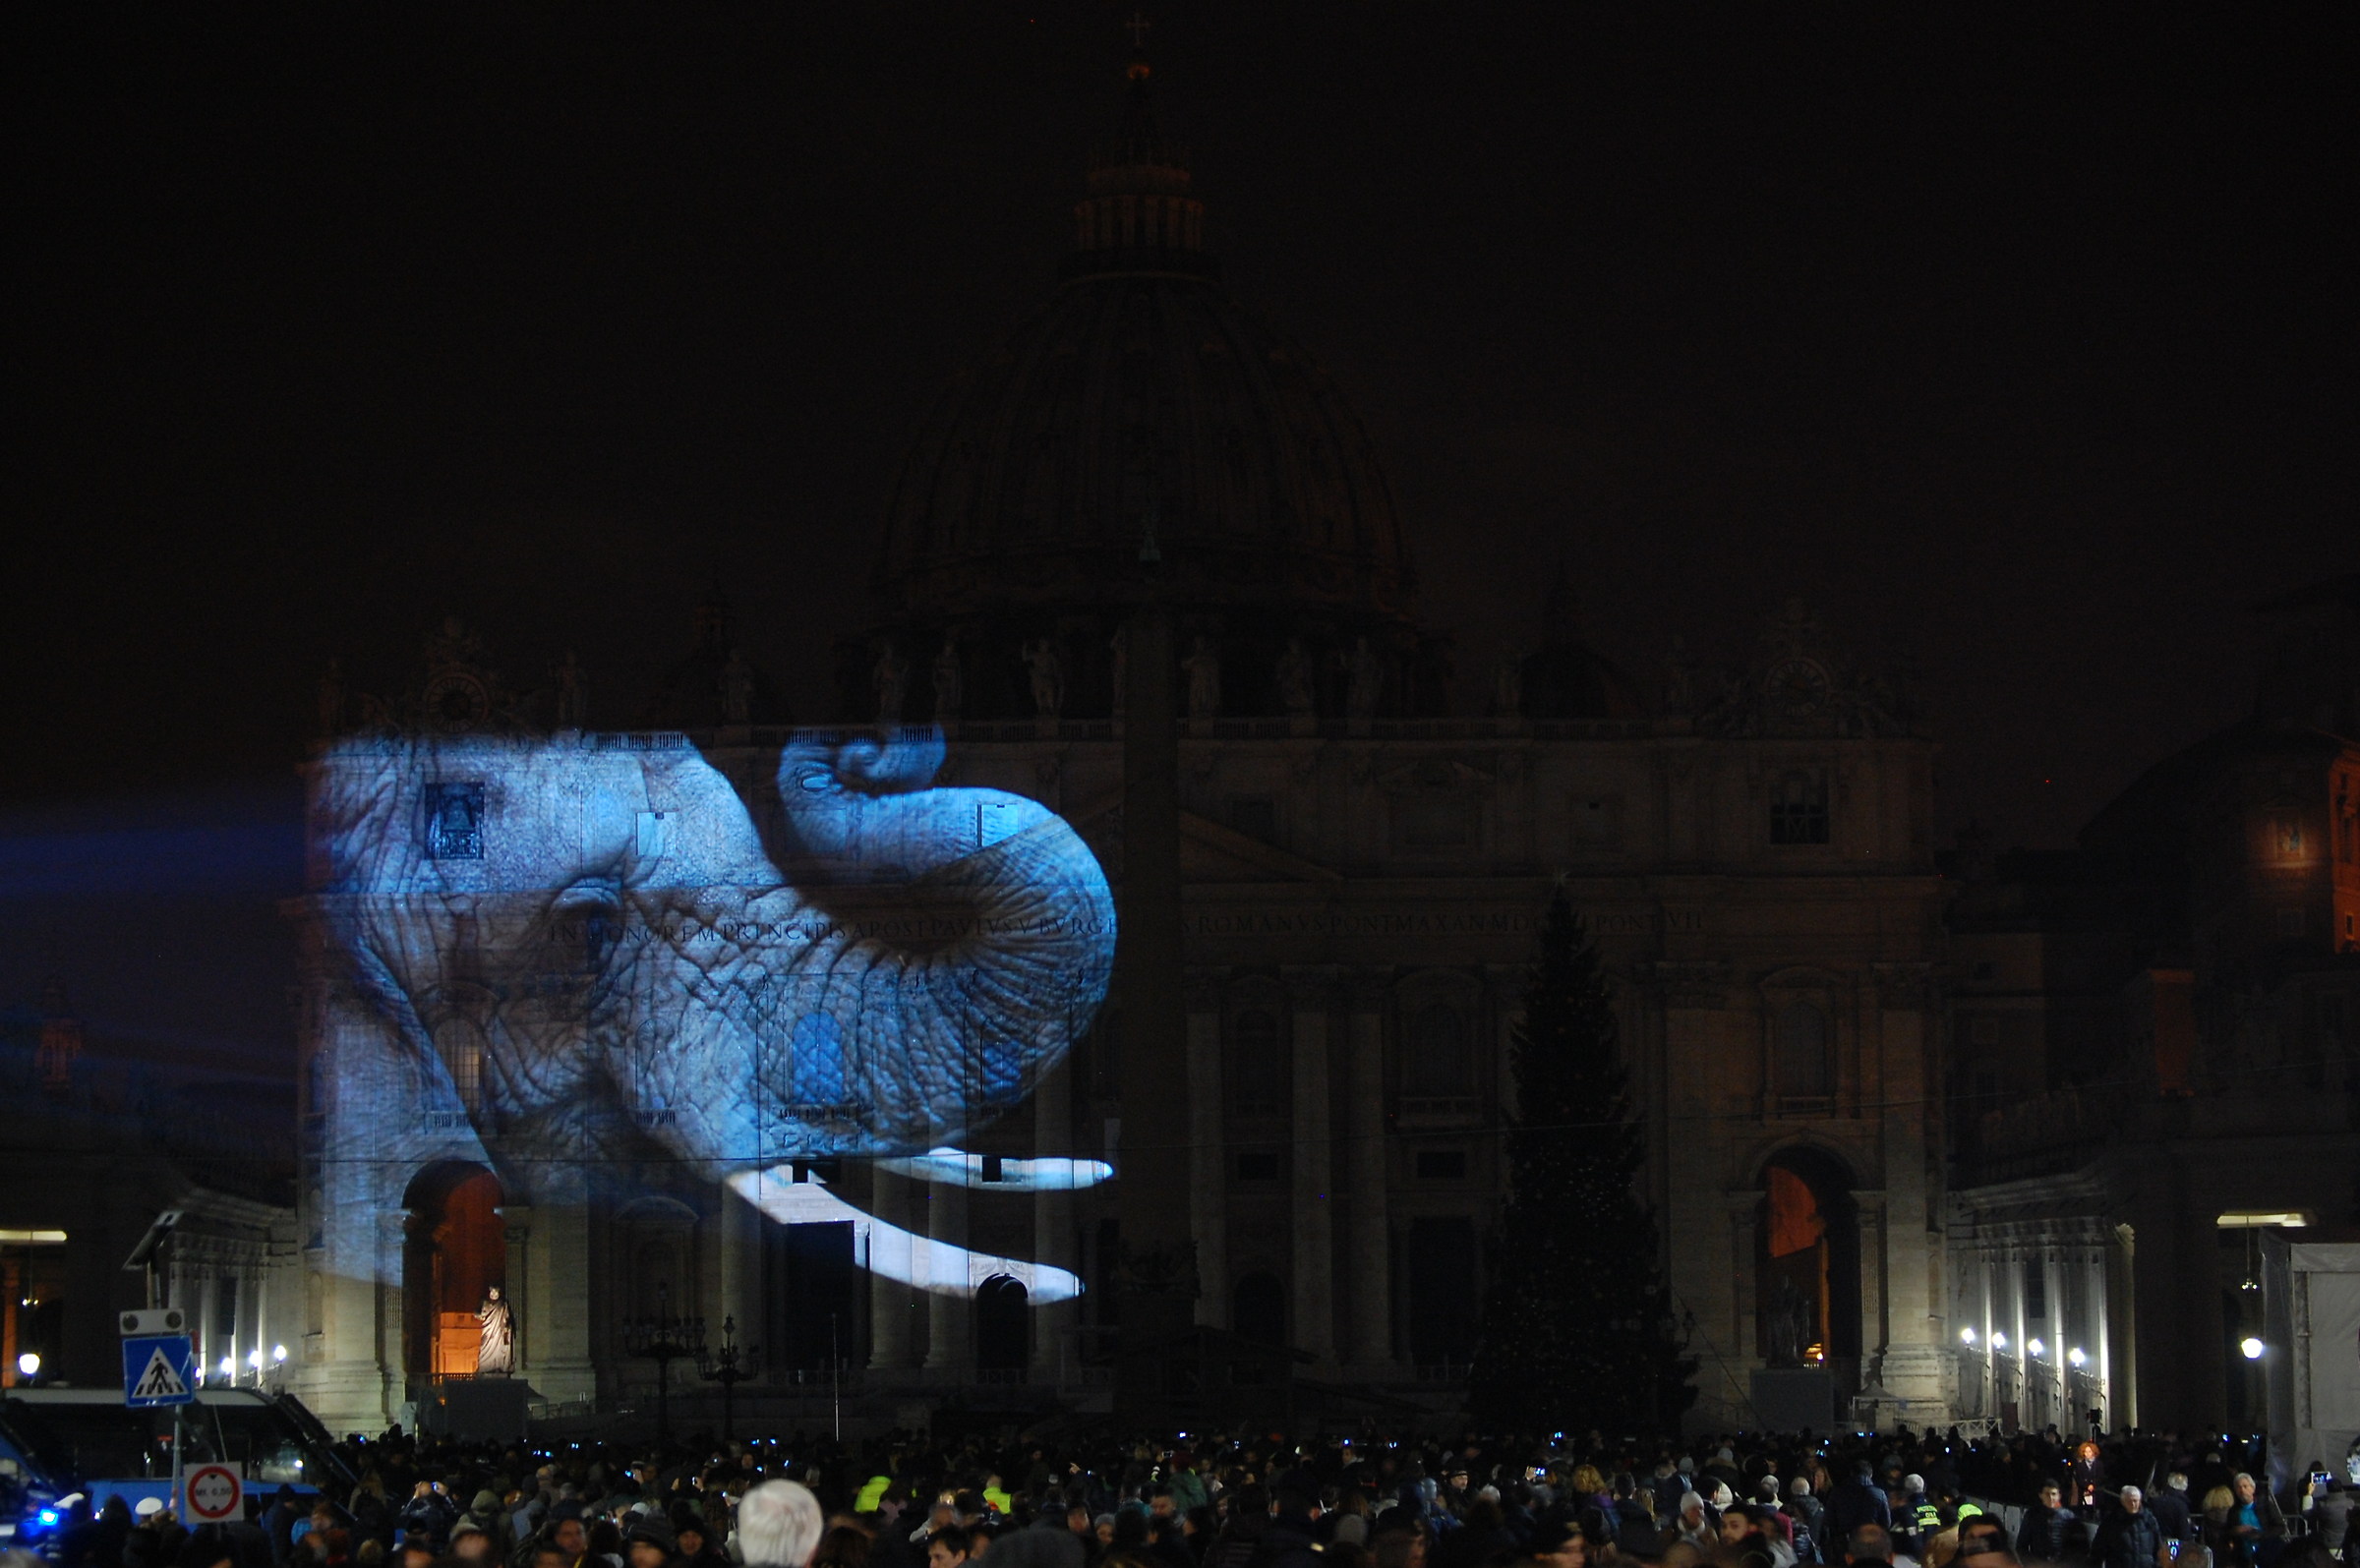 Fiat lux - St. Peter's Basilica 3 - Elephant...